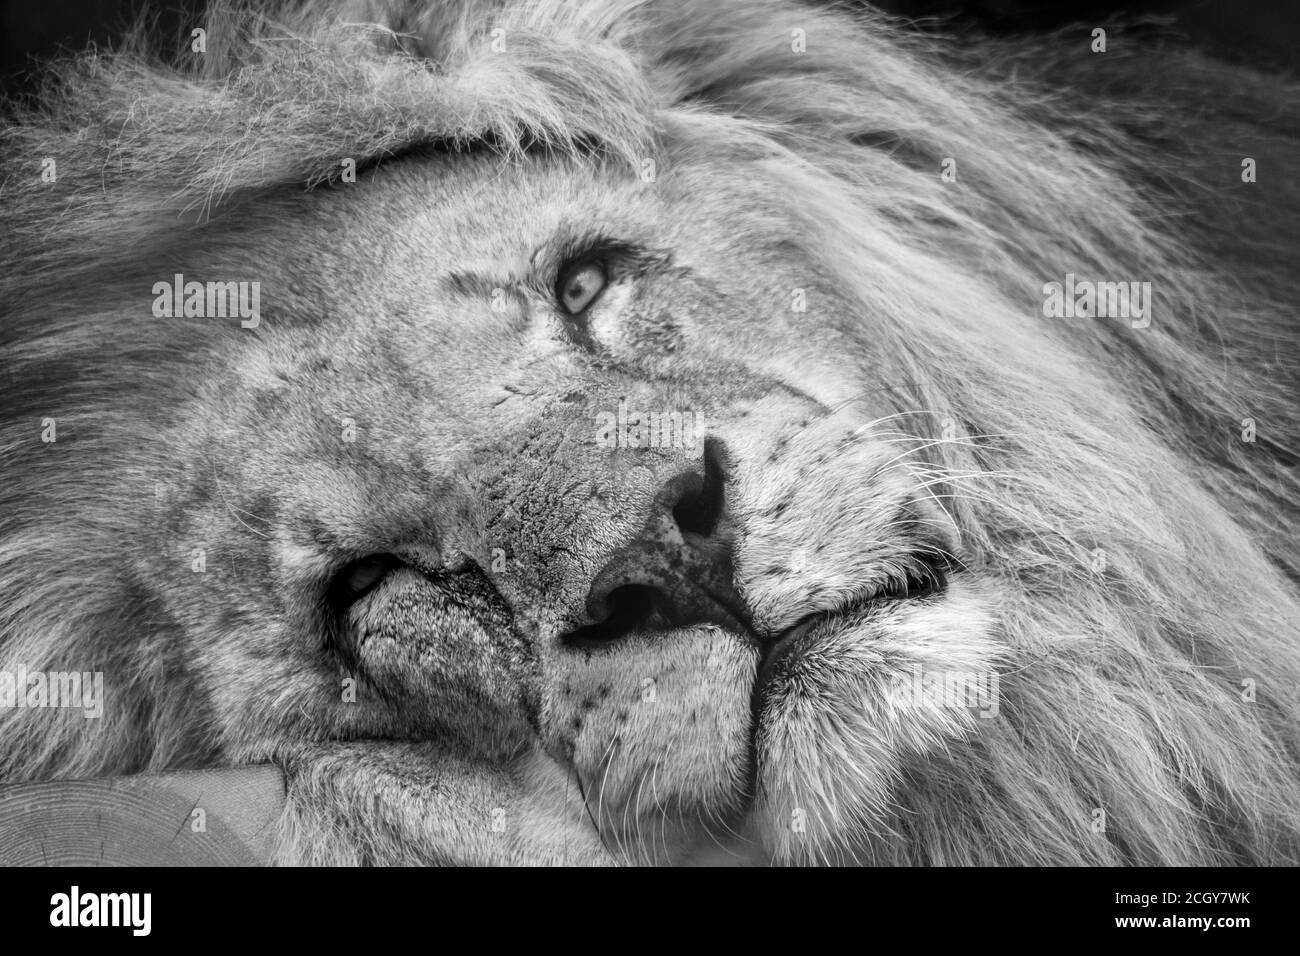 Lion black and white portrait Stock Photo